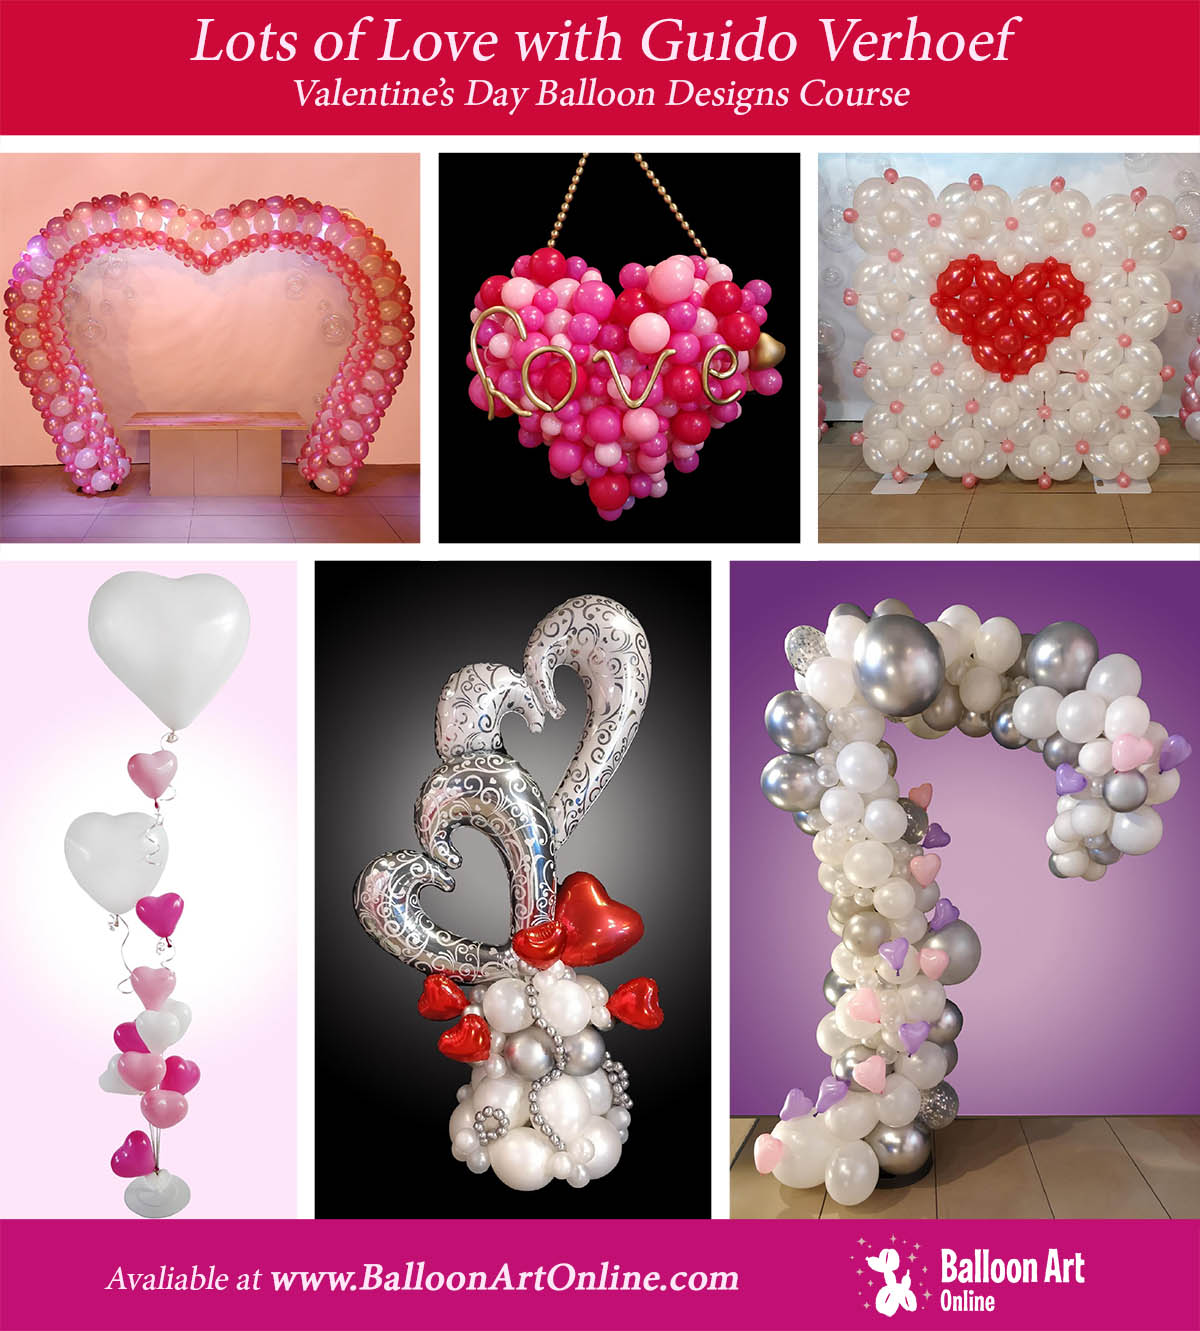 Balloon designs for Valentine's Day